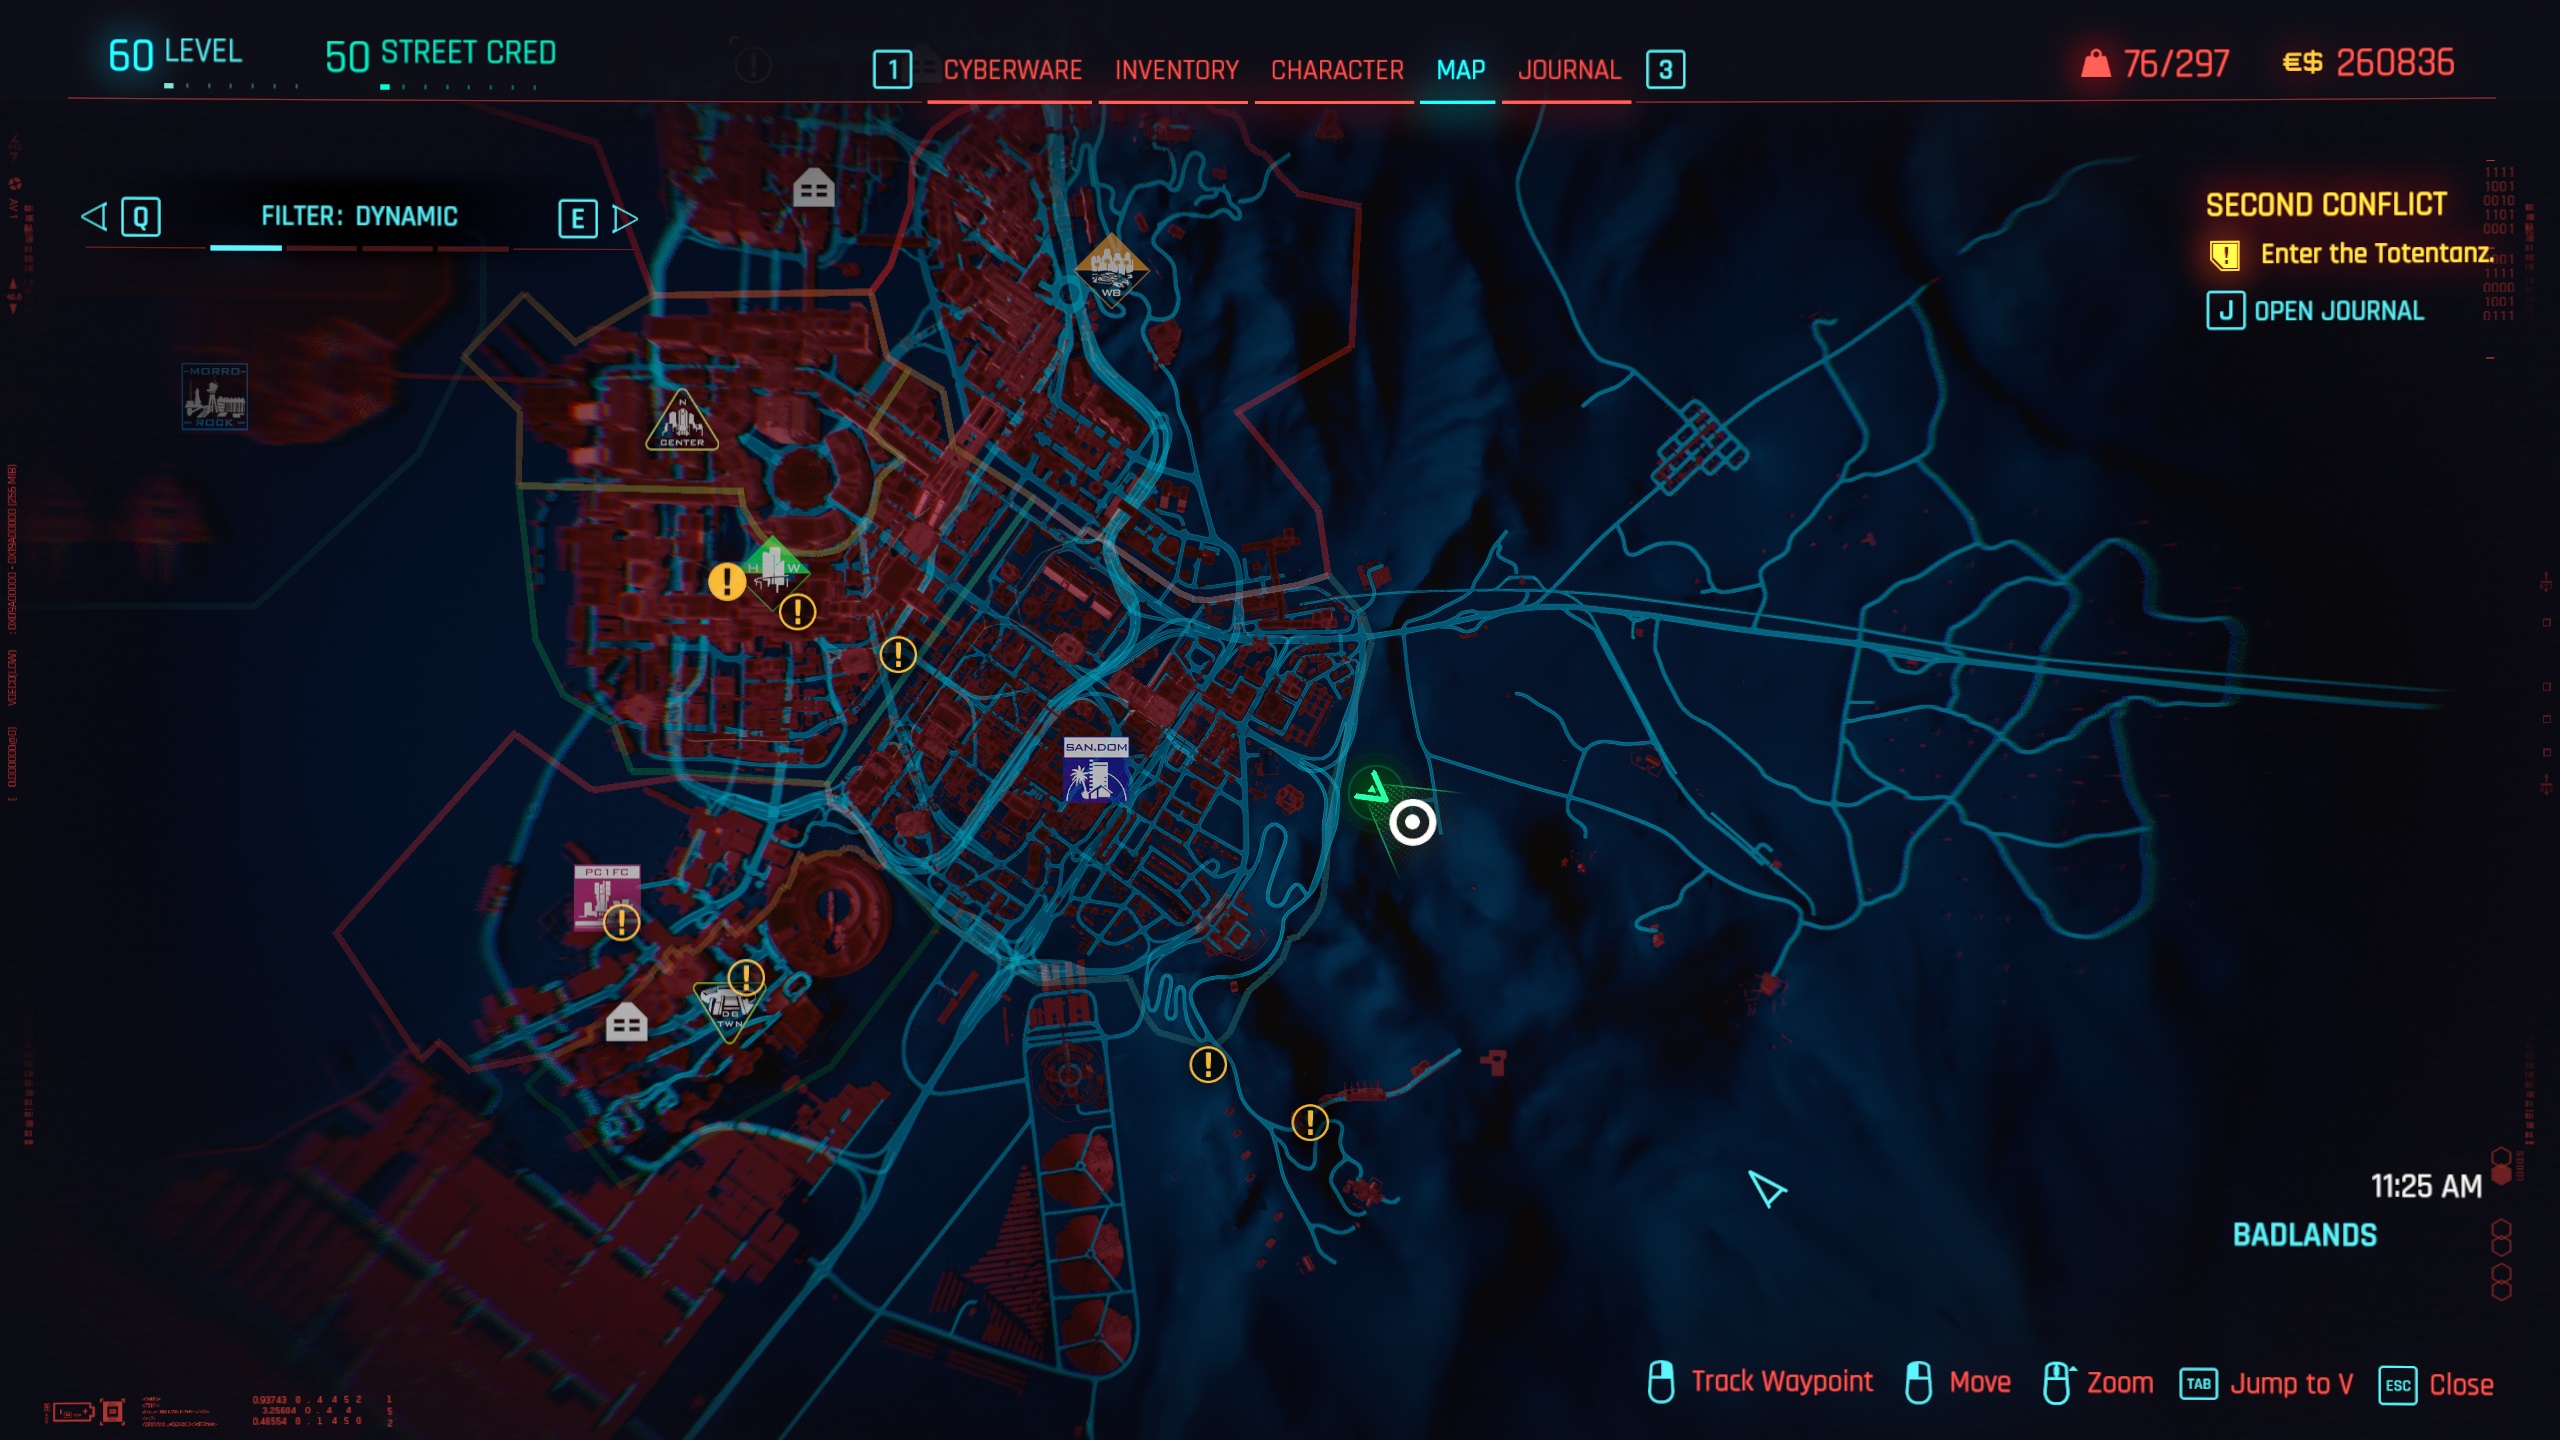 Cyberpunk map showing location of laptop